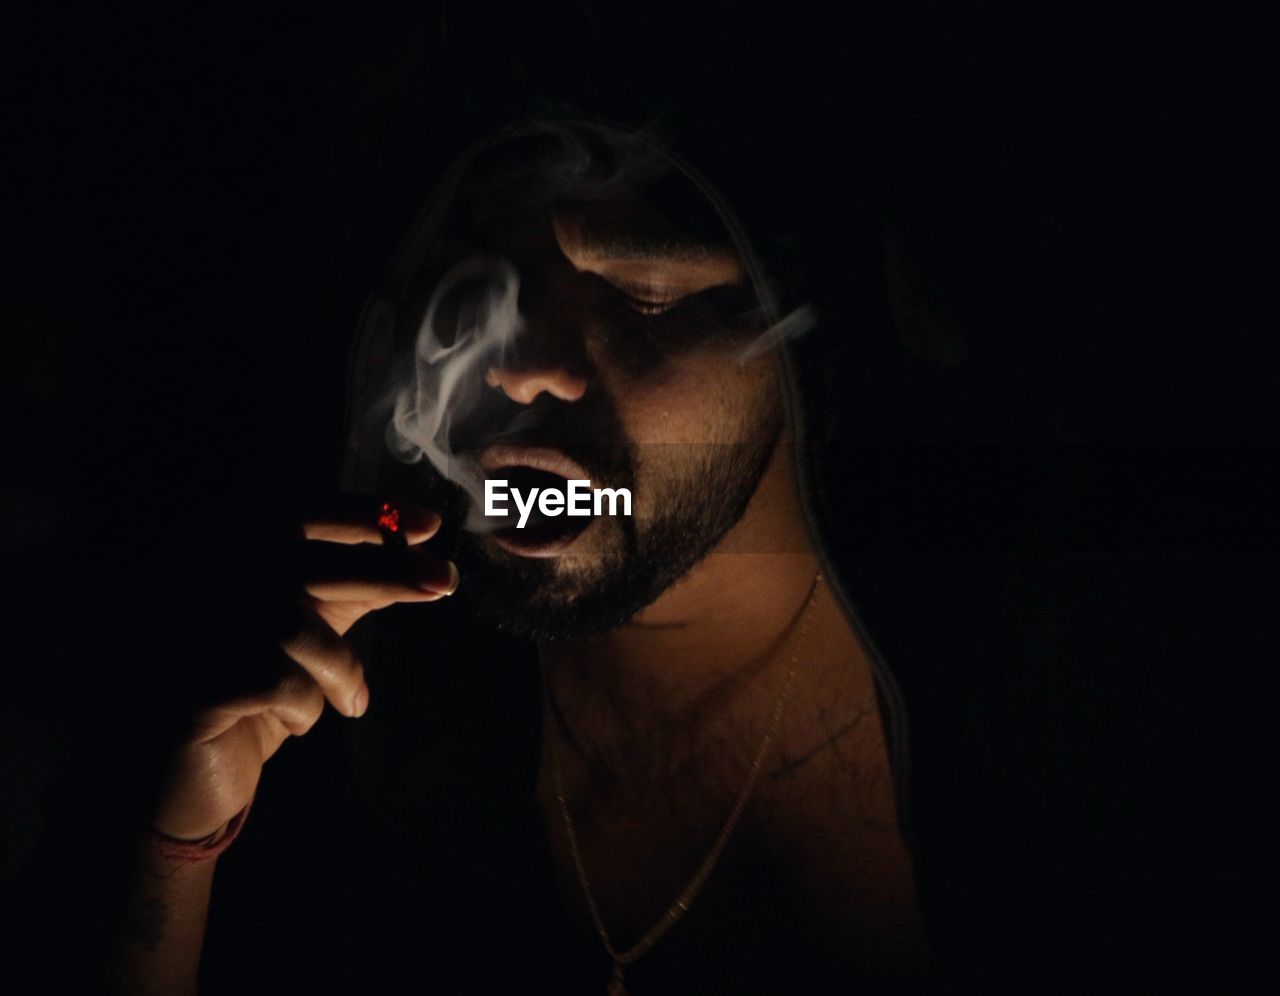 Man smoking cigarette in dark